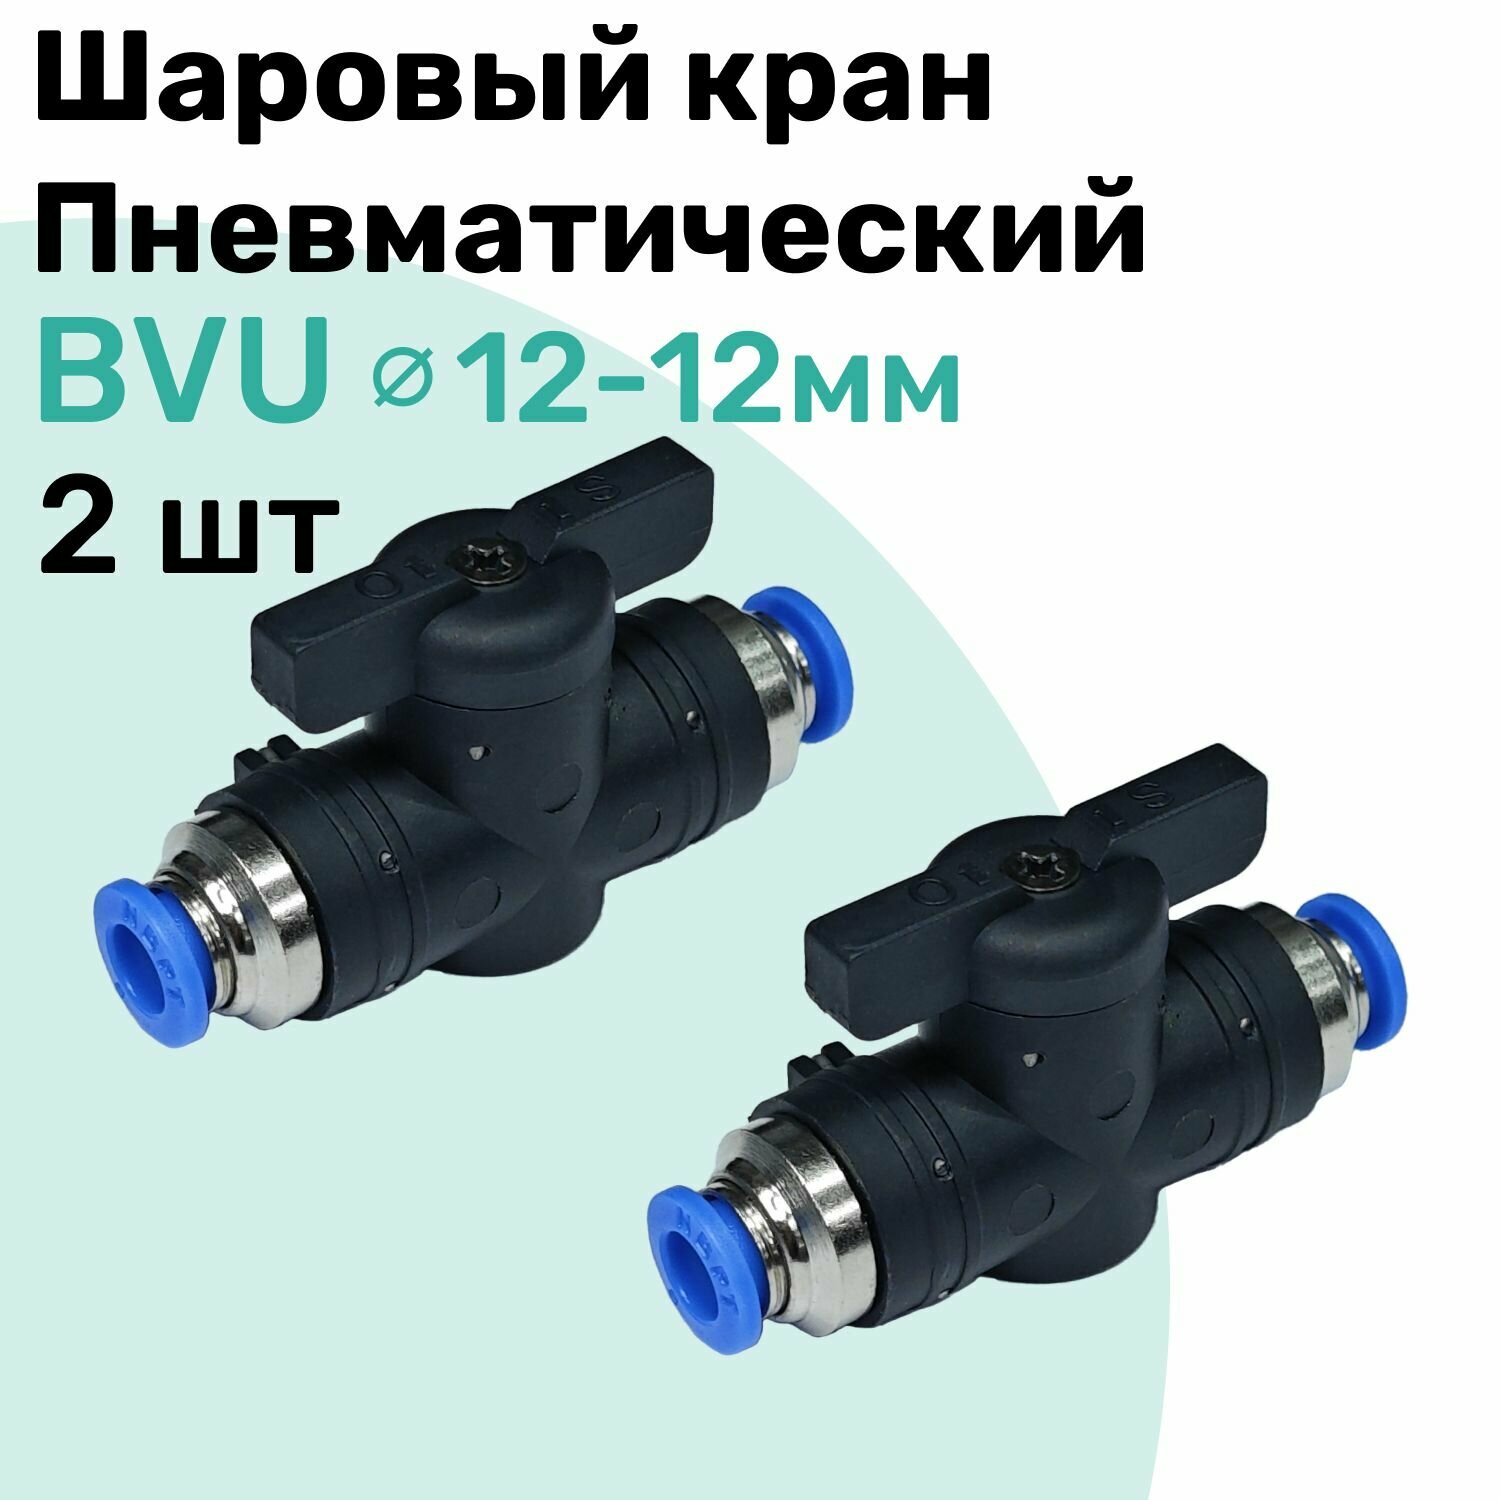 Шаровый кран пневматический BVU 12-12 мм, Пневмофитинг NBPT, Набор 2шт